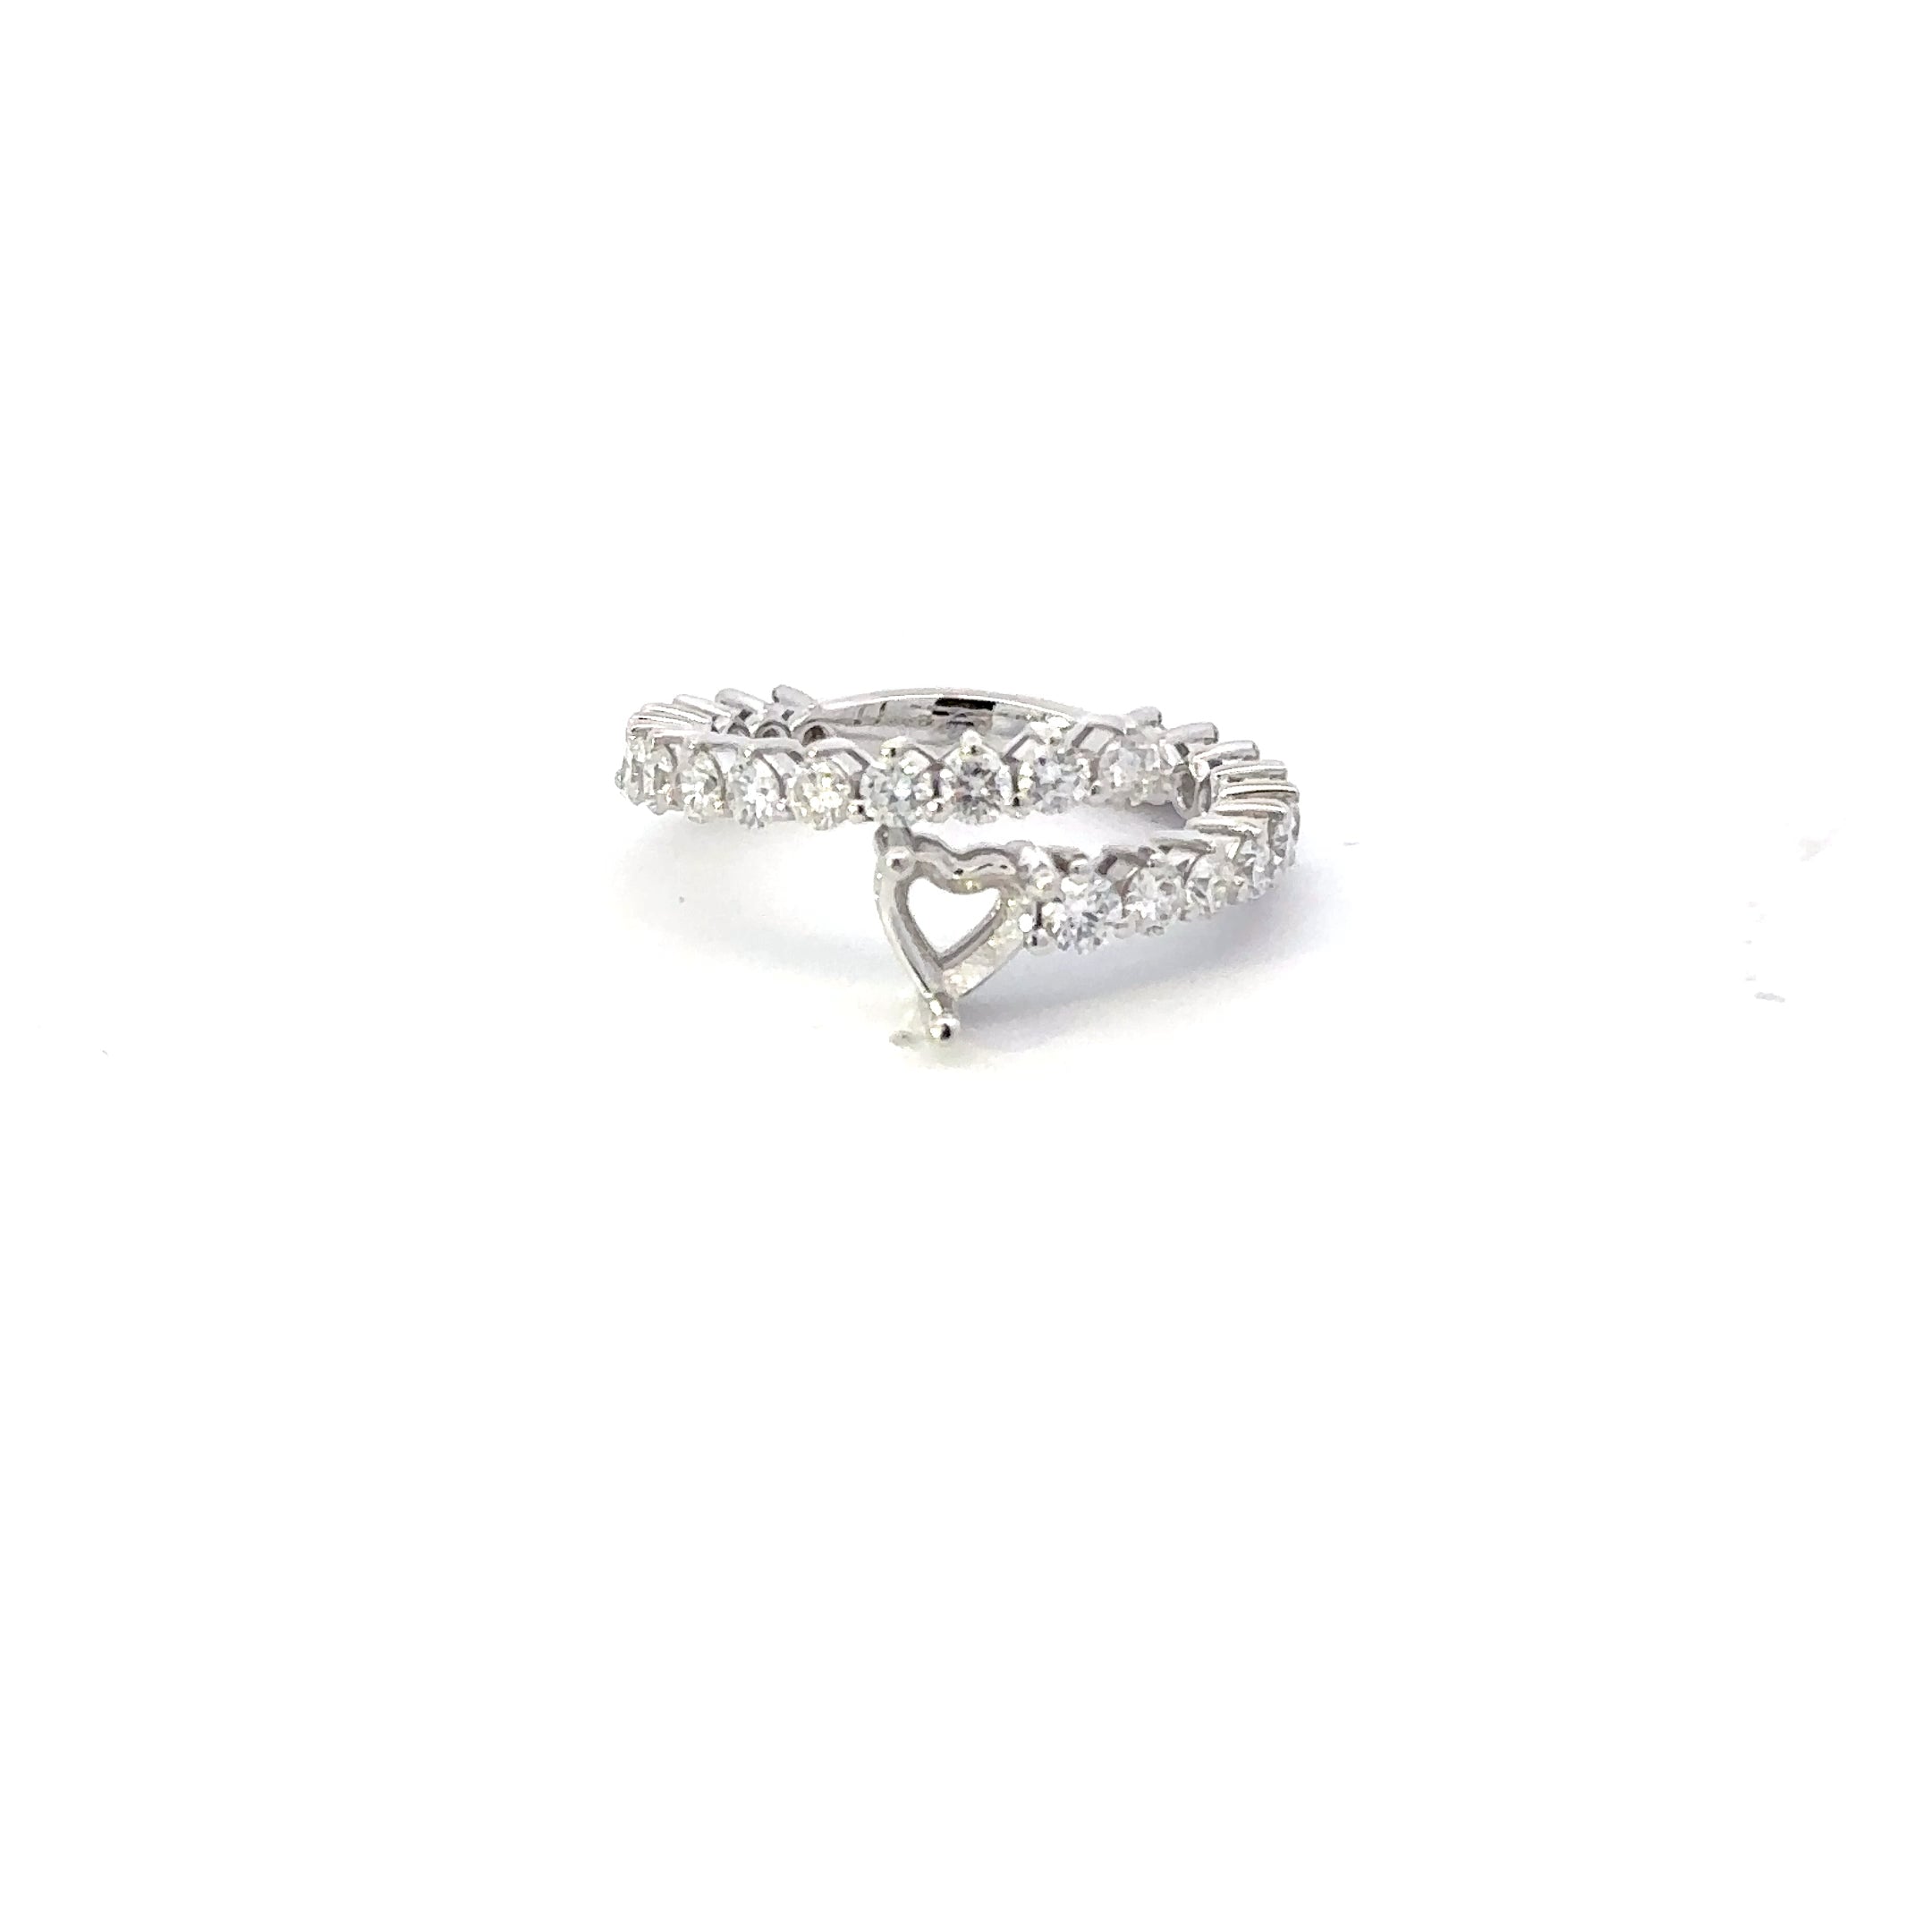 Romantic 18k White Gold Heart-Shaped Diamond Engagement Ring